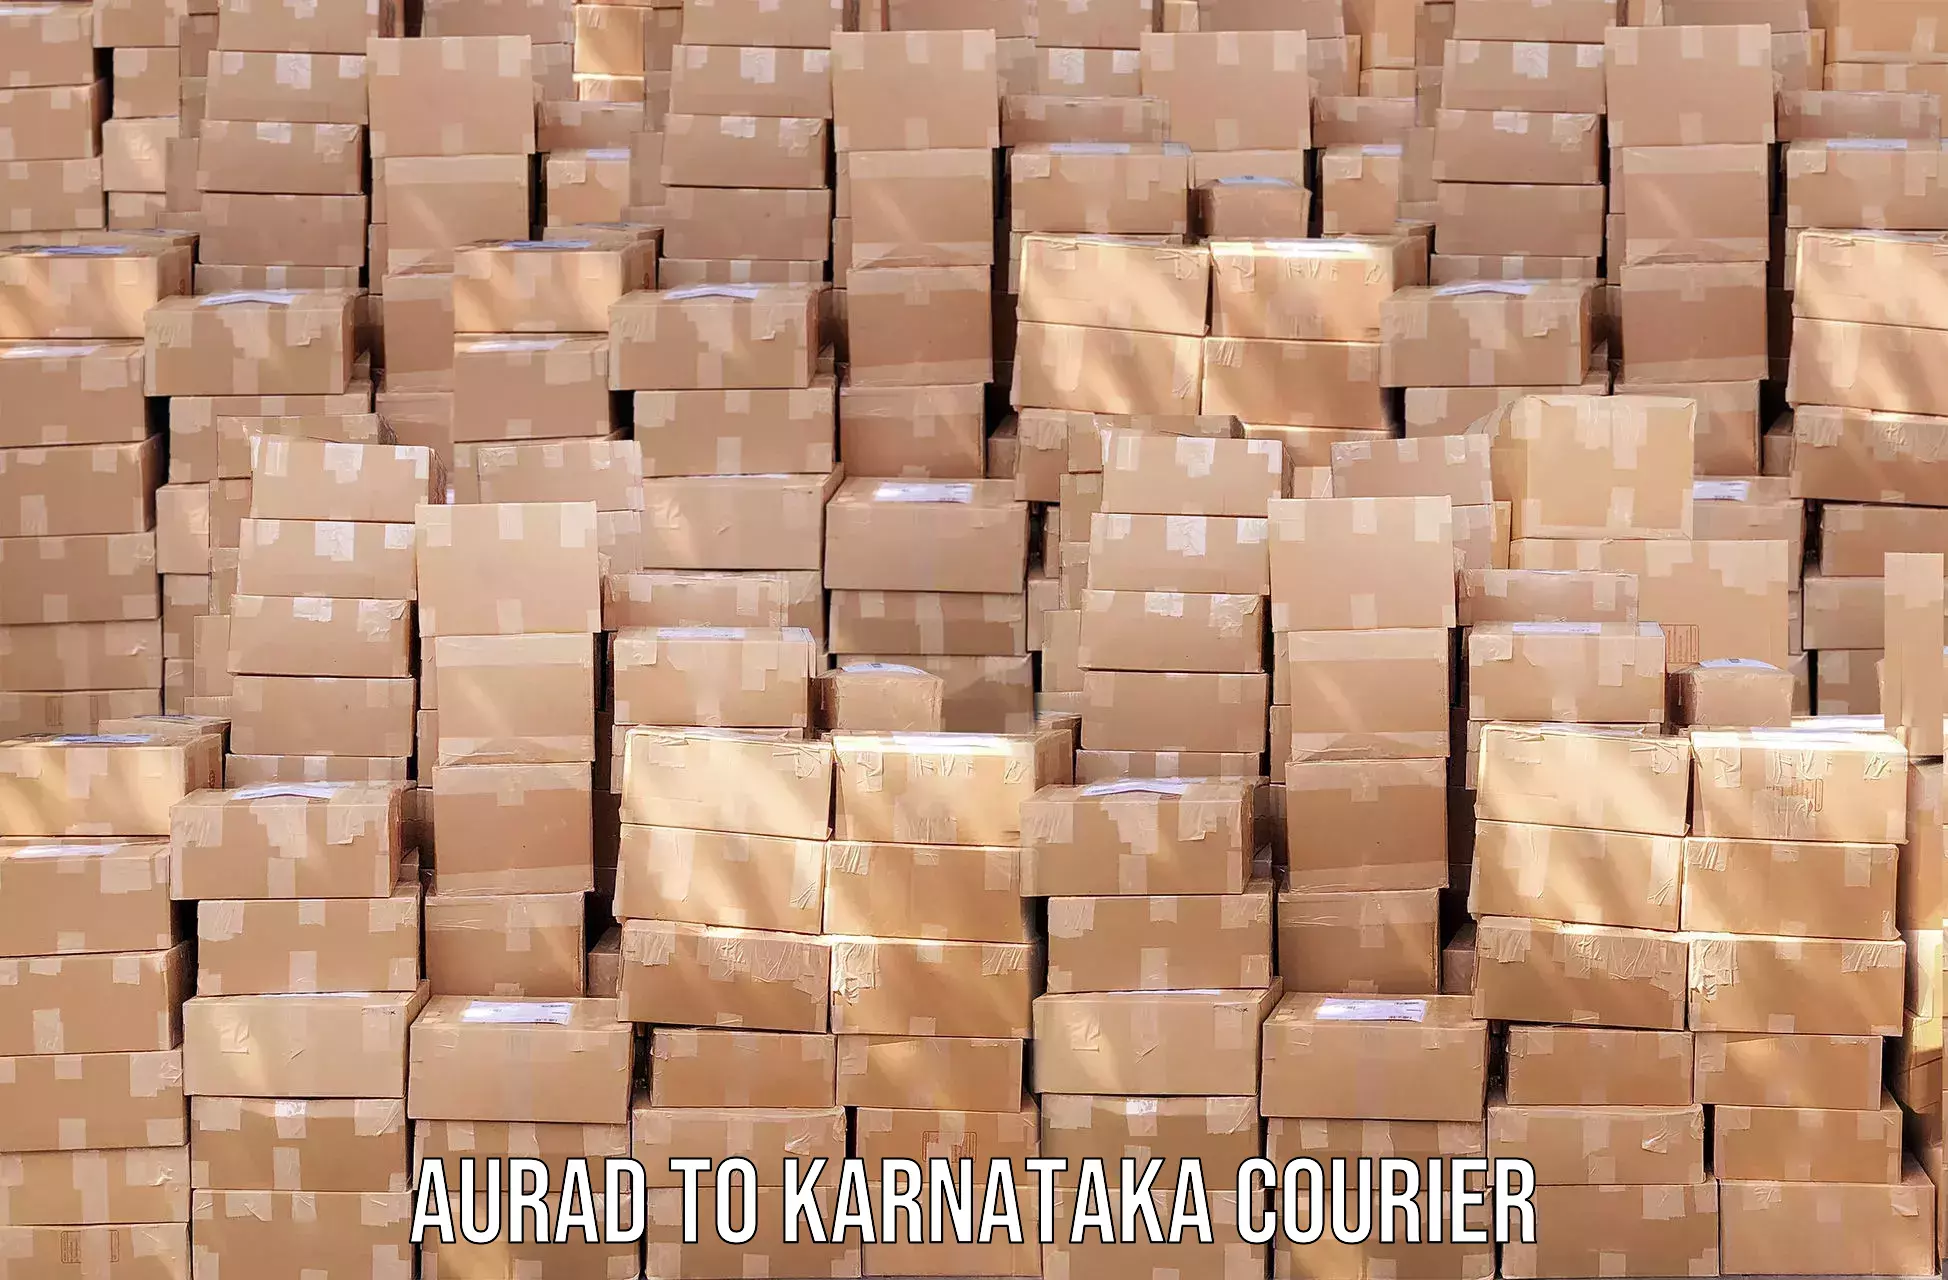 Next-day freight services Aurad to Karnataka